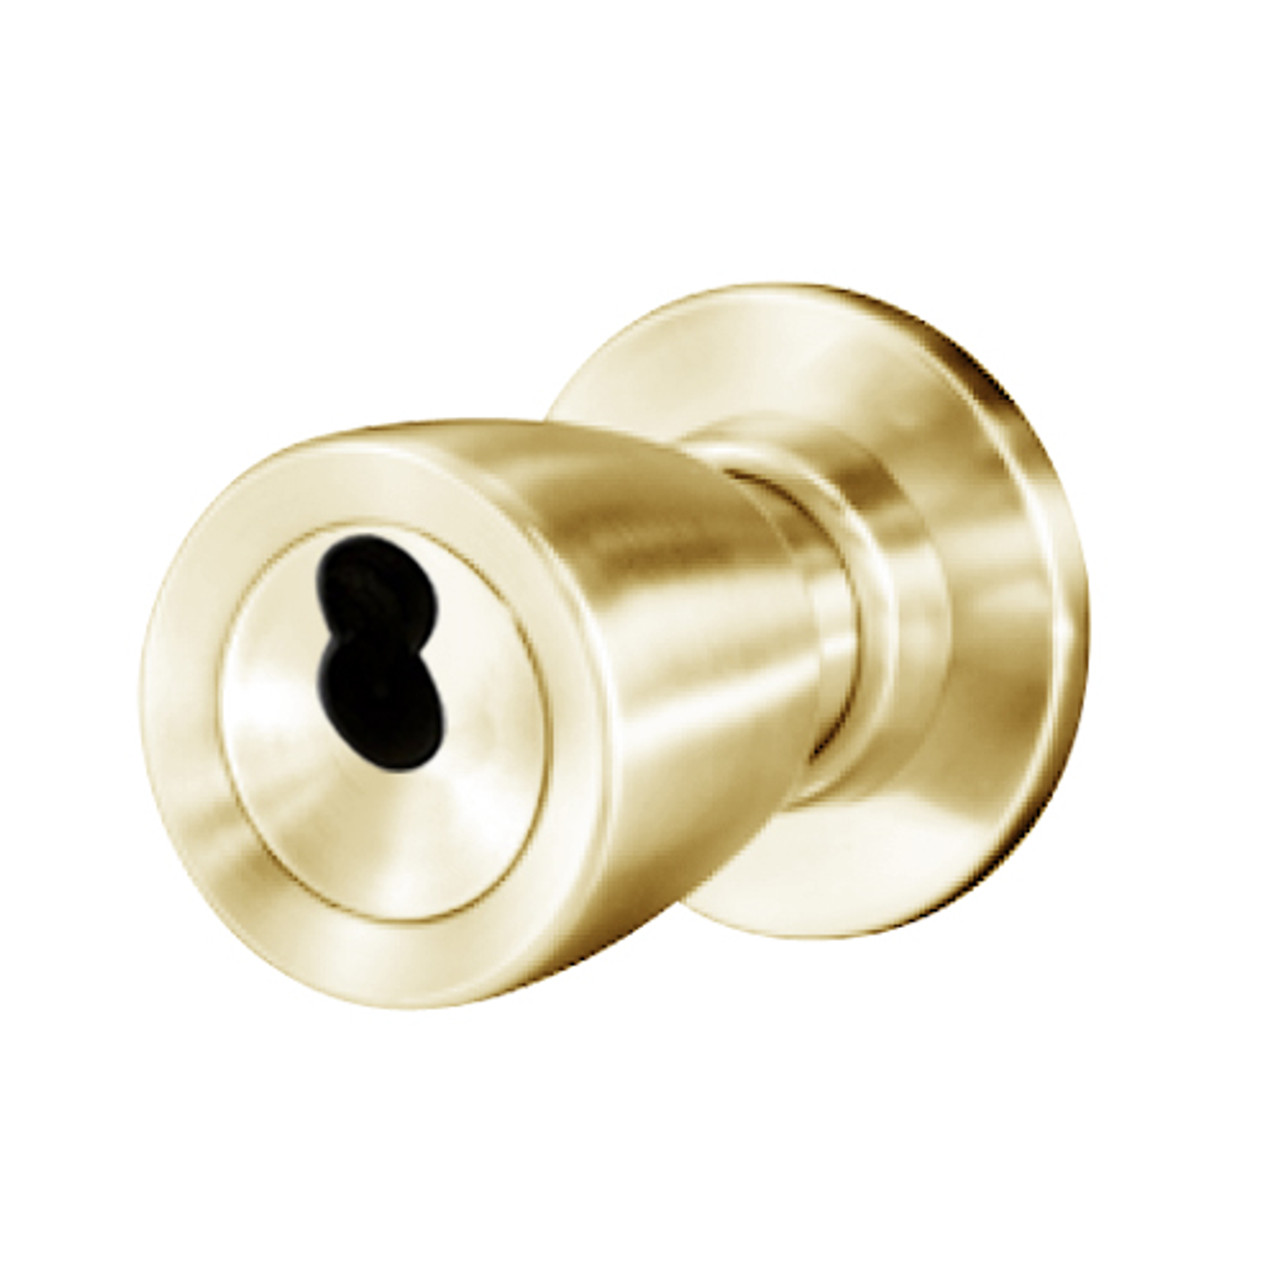 8K57YD6CS3606 Best 8K Series Exit Heavy Duty Cylindrical Knob Locks with Tulip Style in Satin Brass